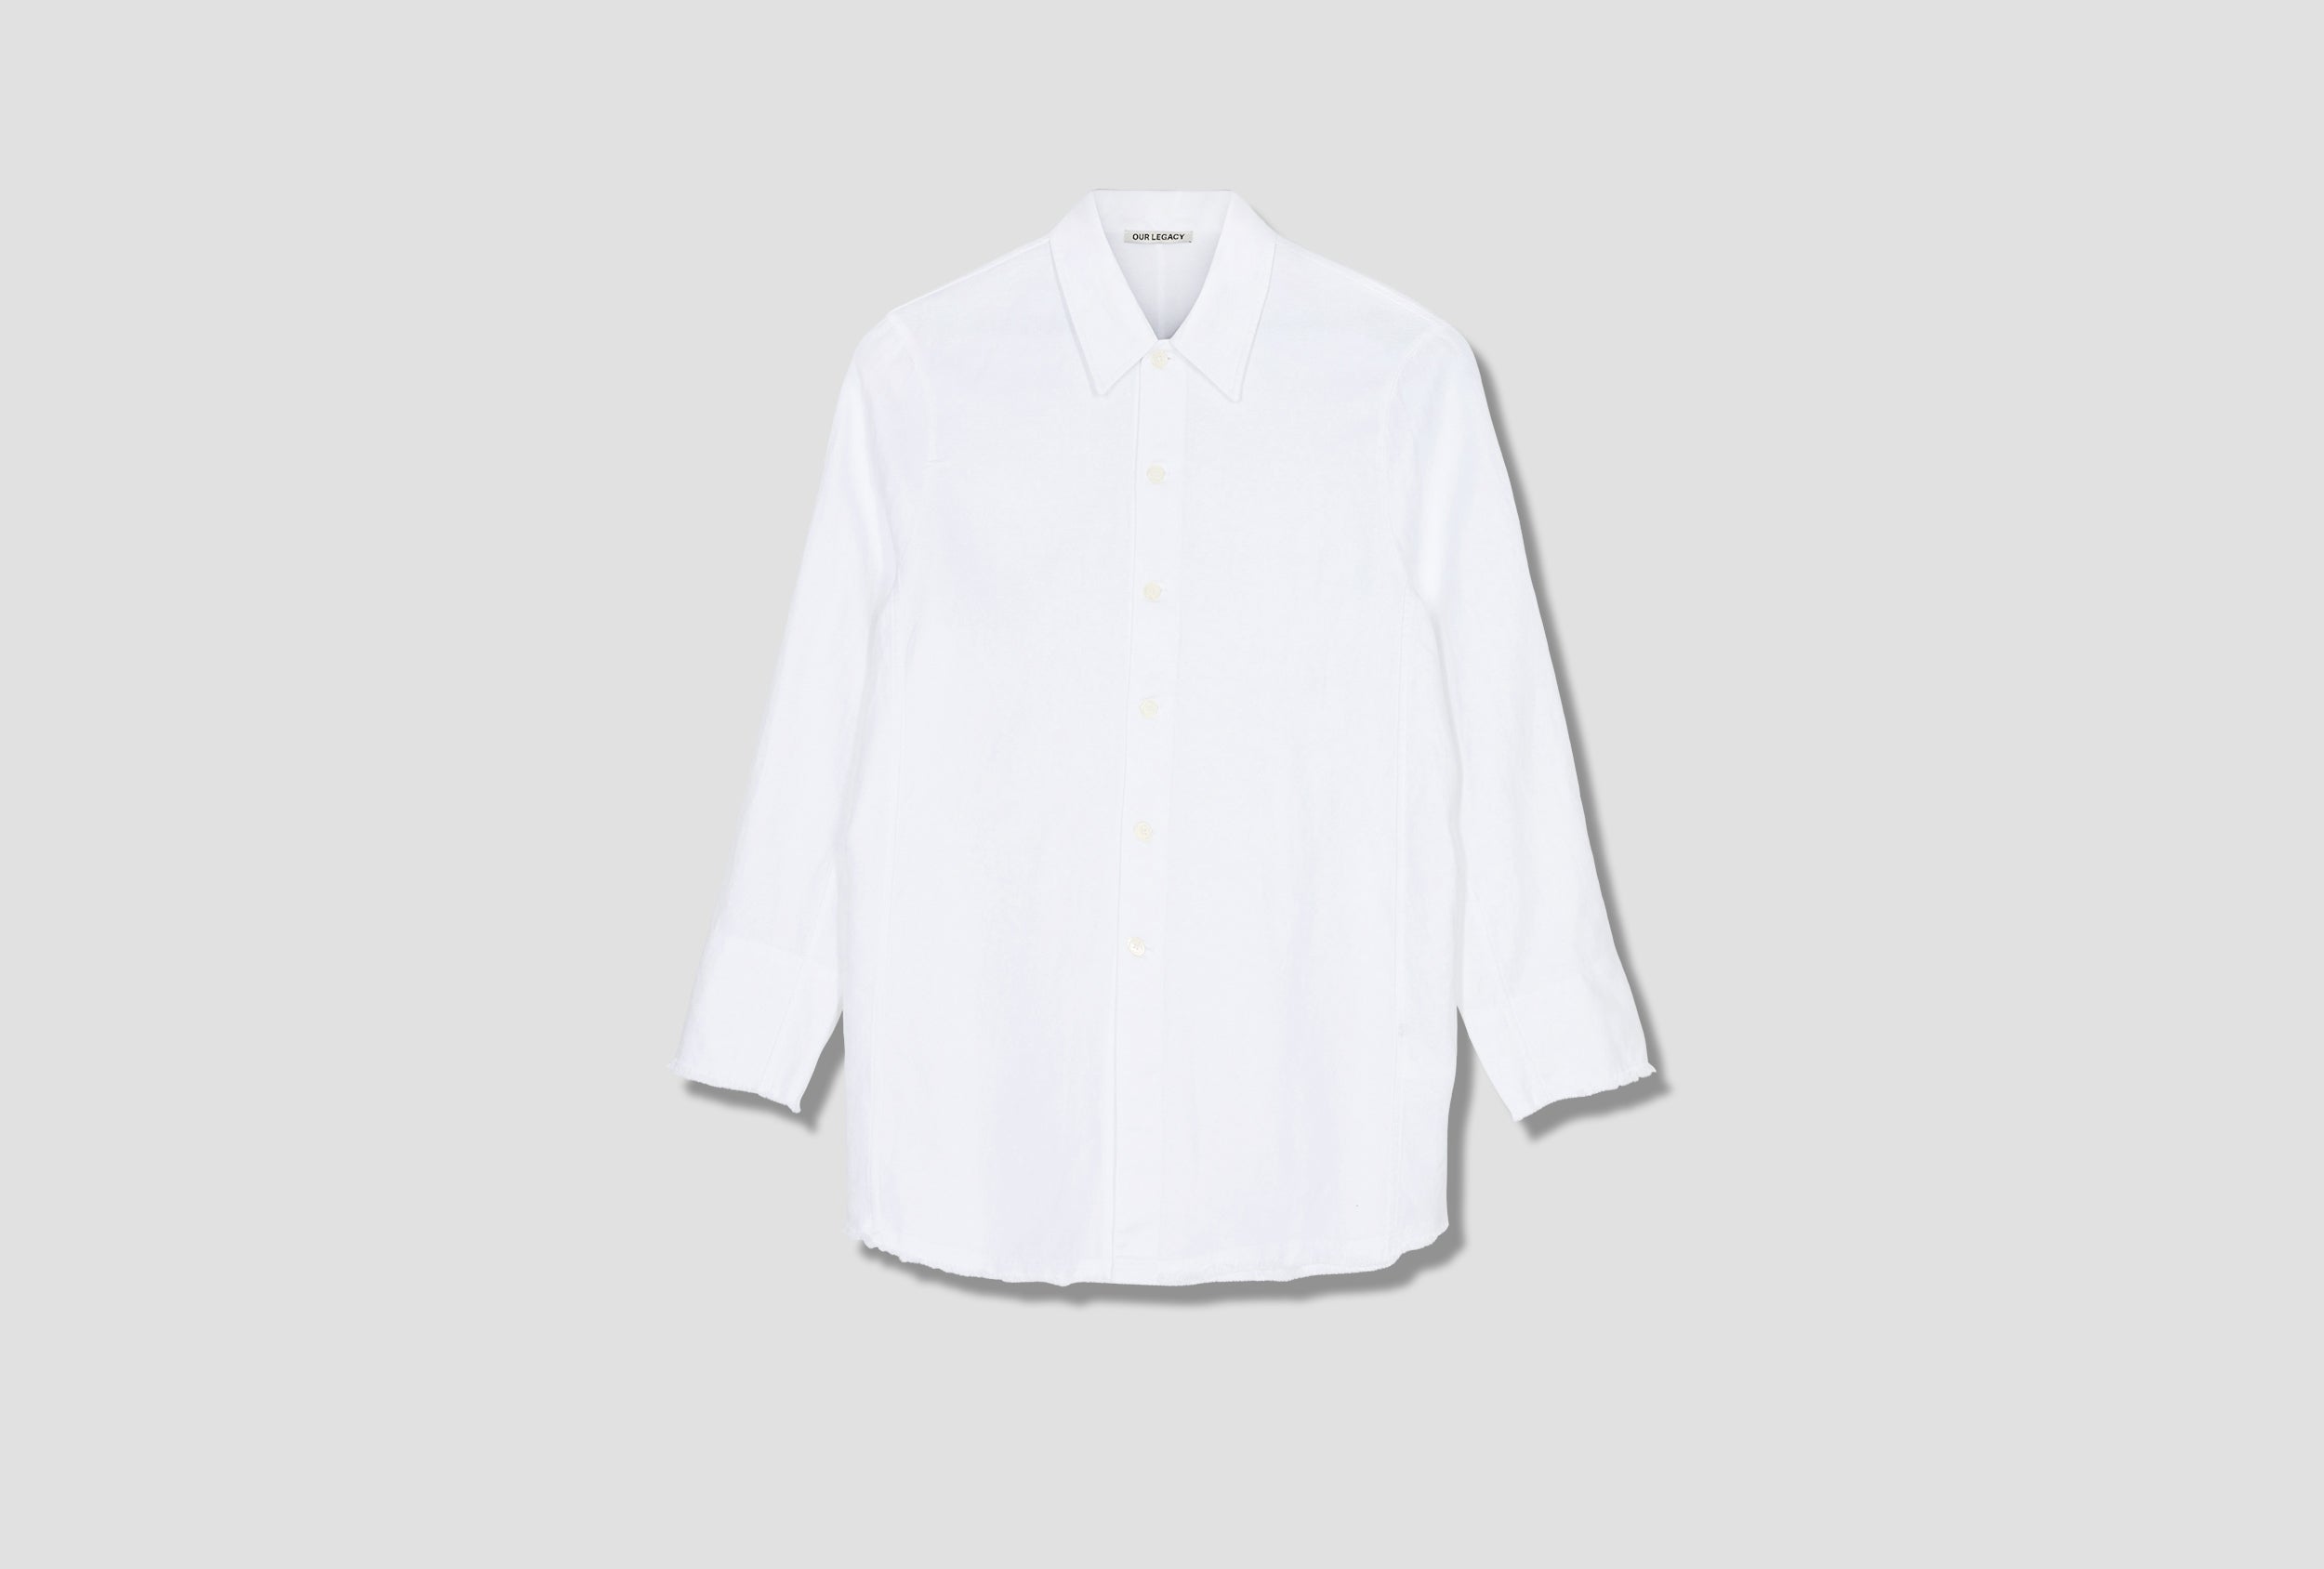 T-shirt FRAGMENT White size M International in Cotton - 24537405